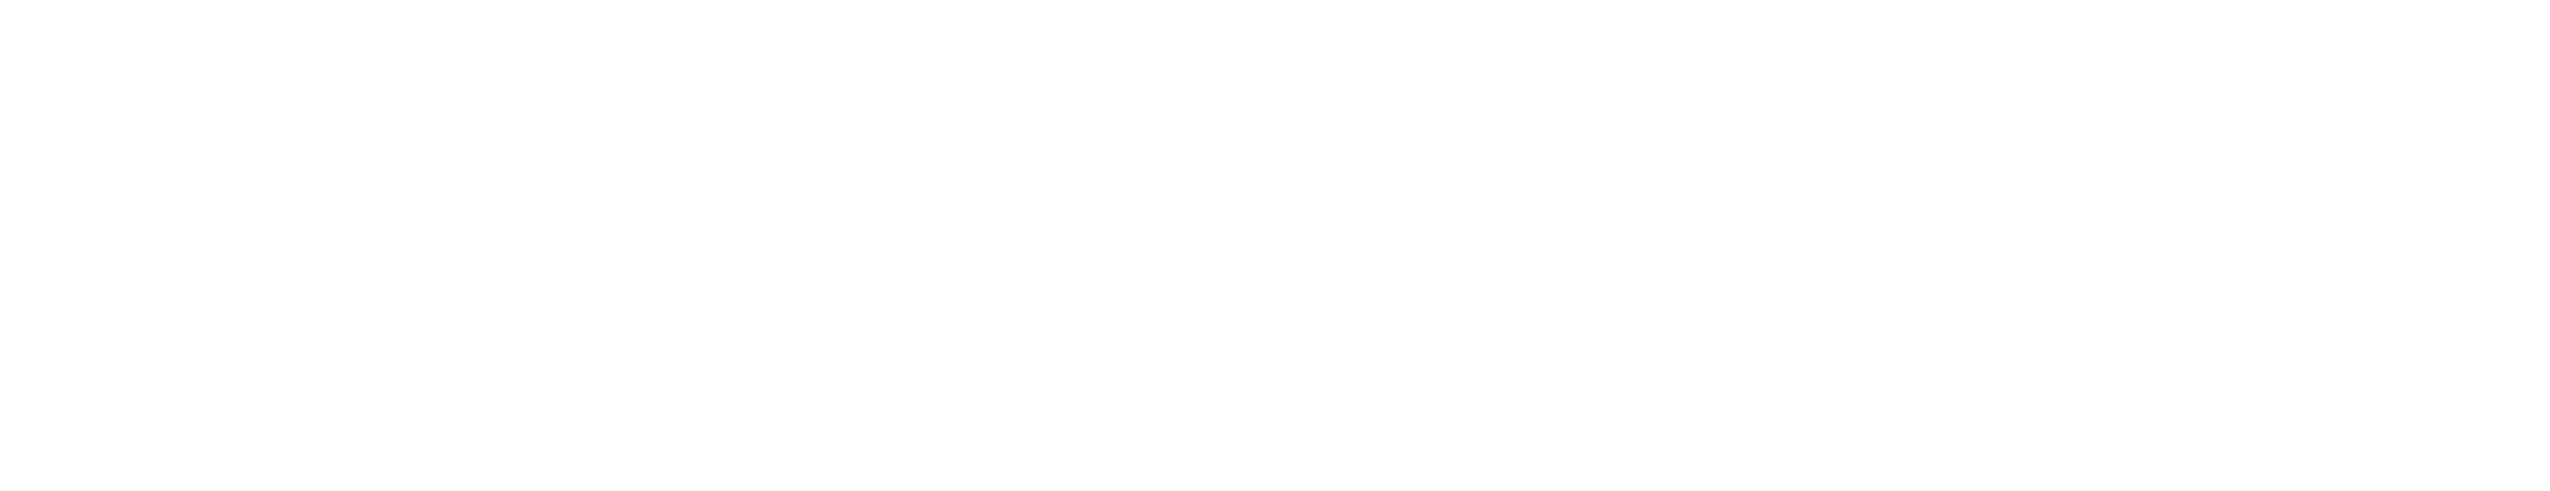 Federation of Maine Dog Clubs